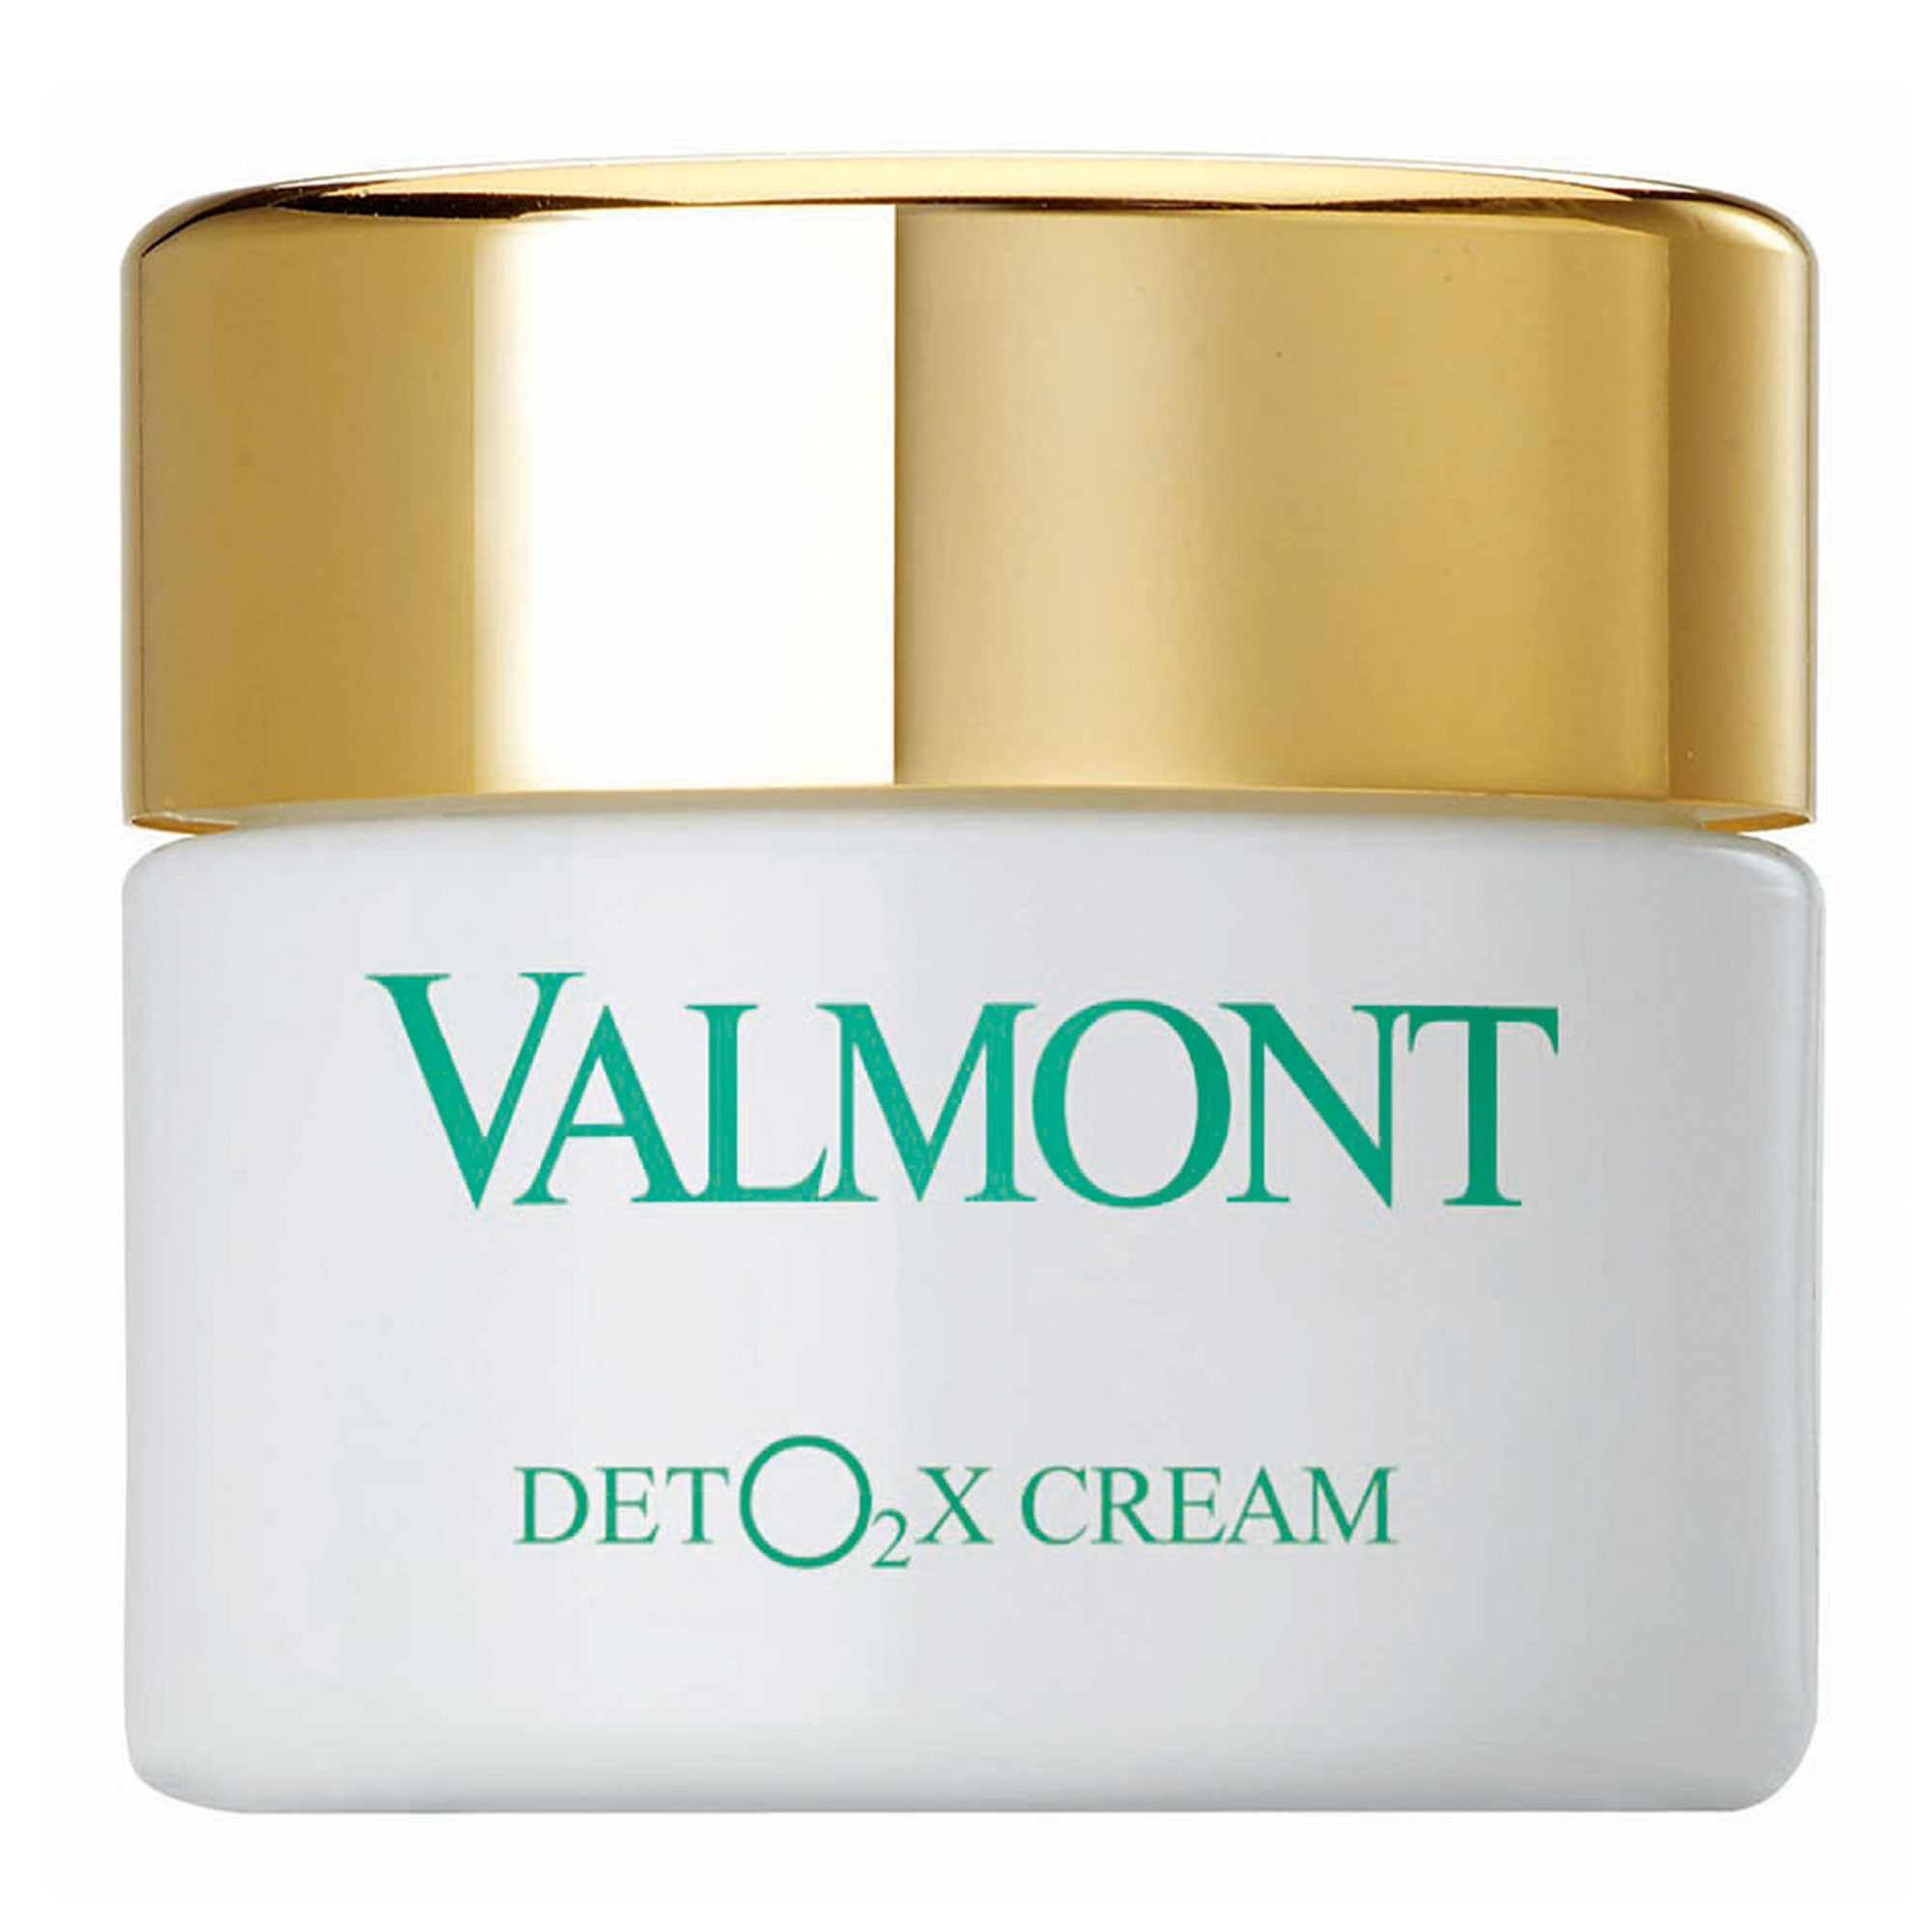 valmont deto2x cream